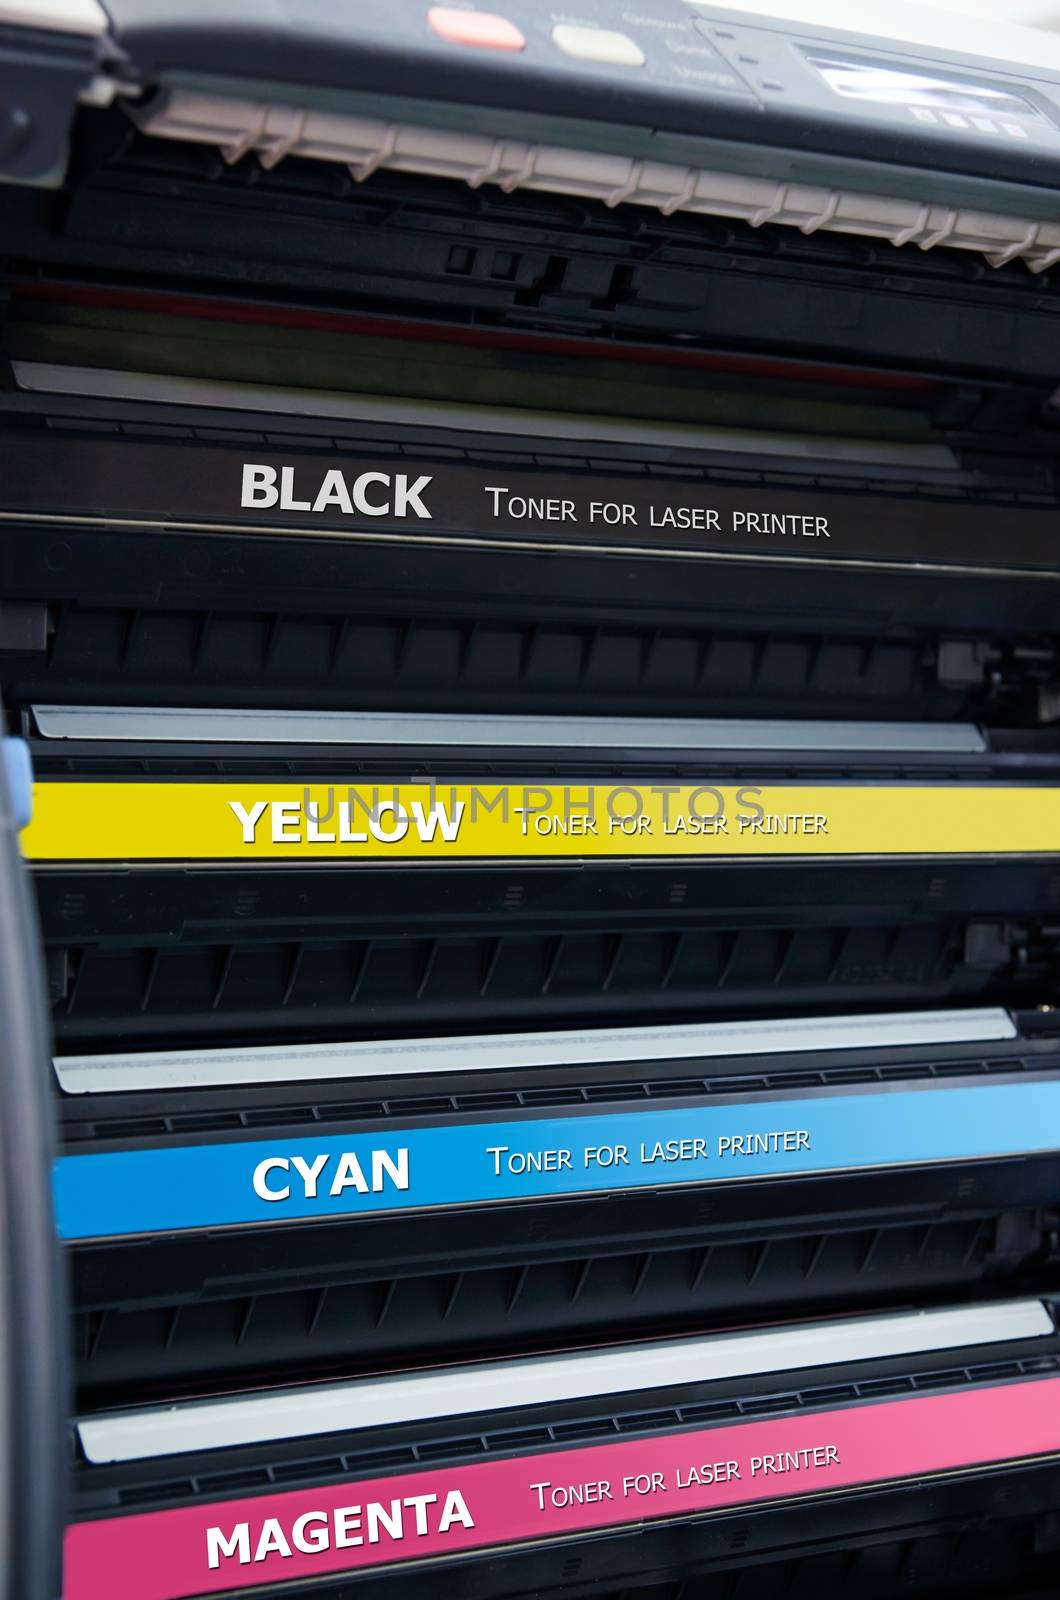 Color laser printer toners cartridges  by simpson33